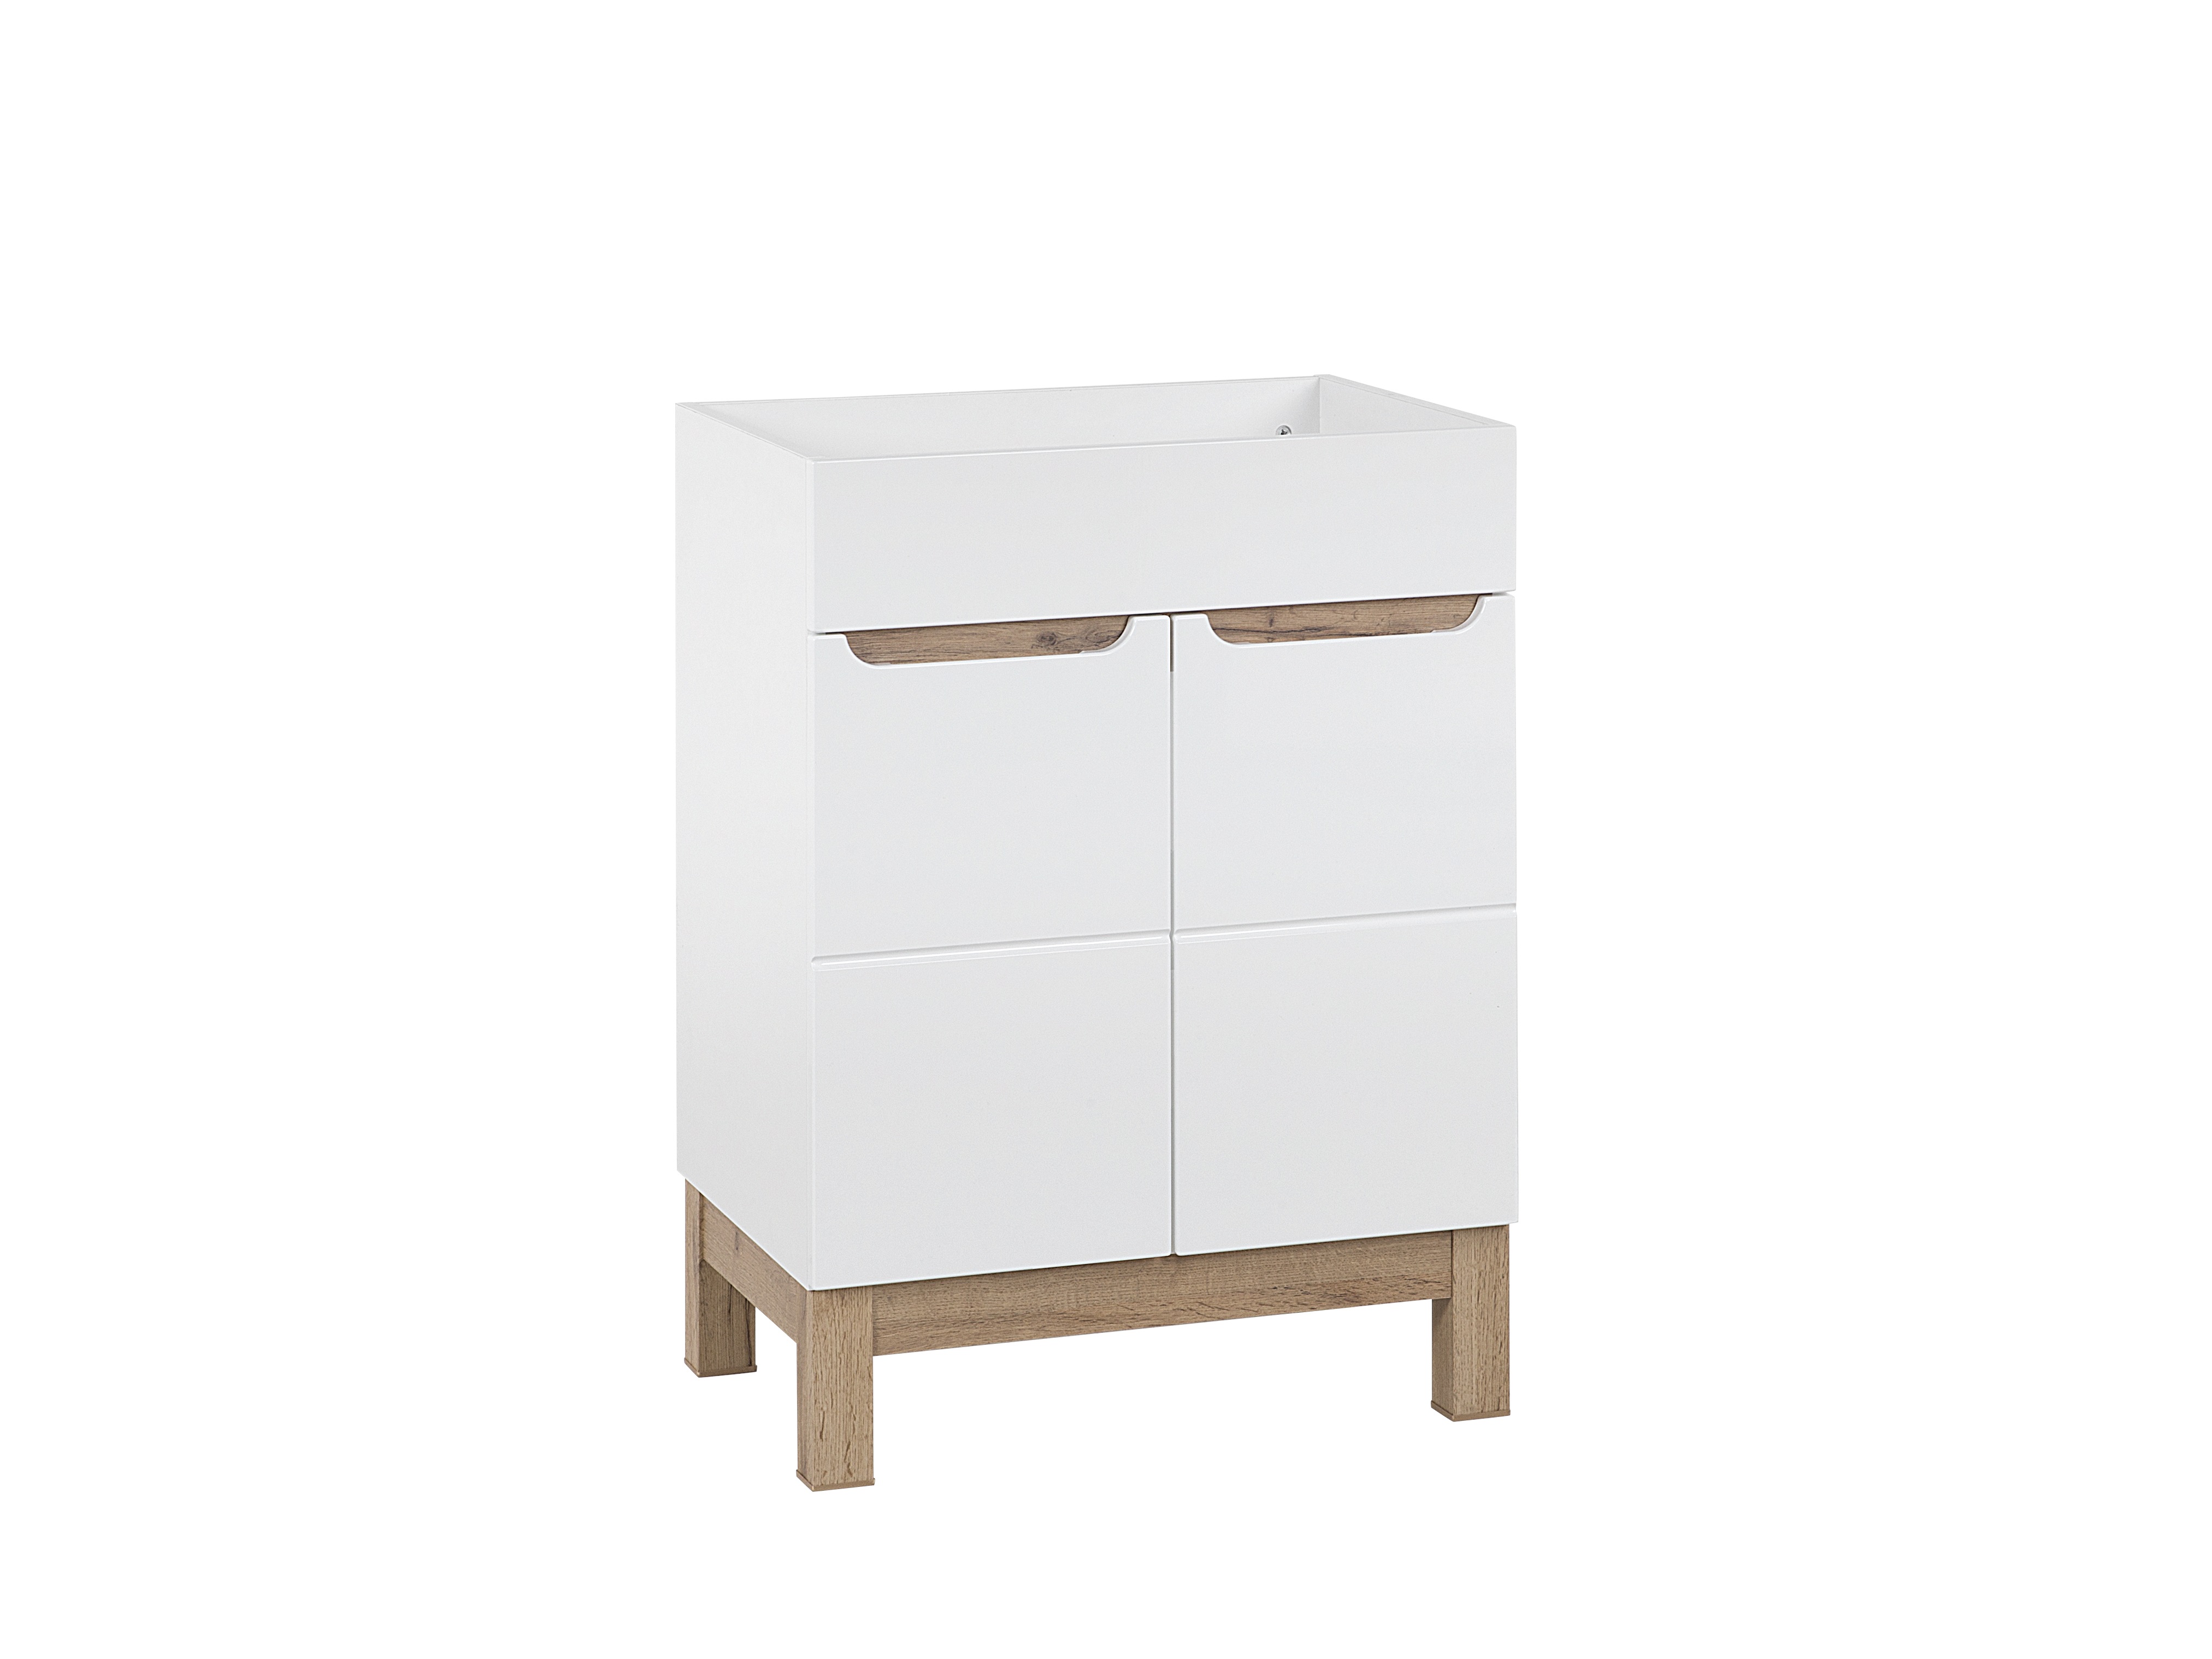 BALI BIAŁE 820 szafka p/um 2D-60 cm/ White cabinet under washbasin 60cm CU-COC-834012 FSC MIX 70%